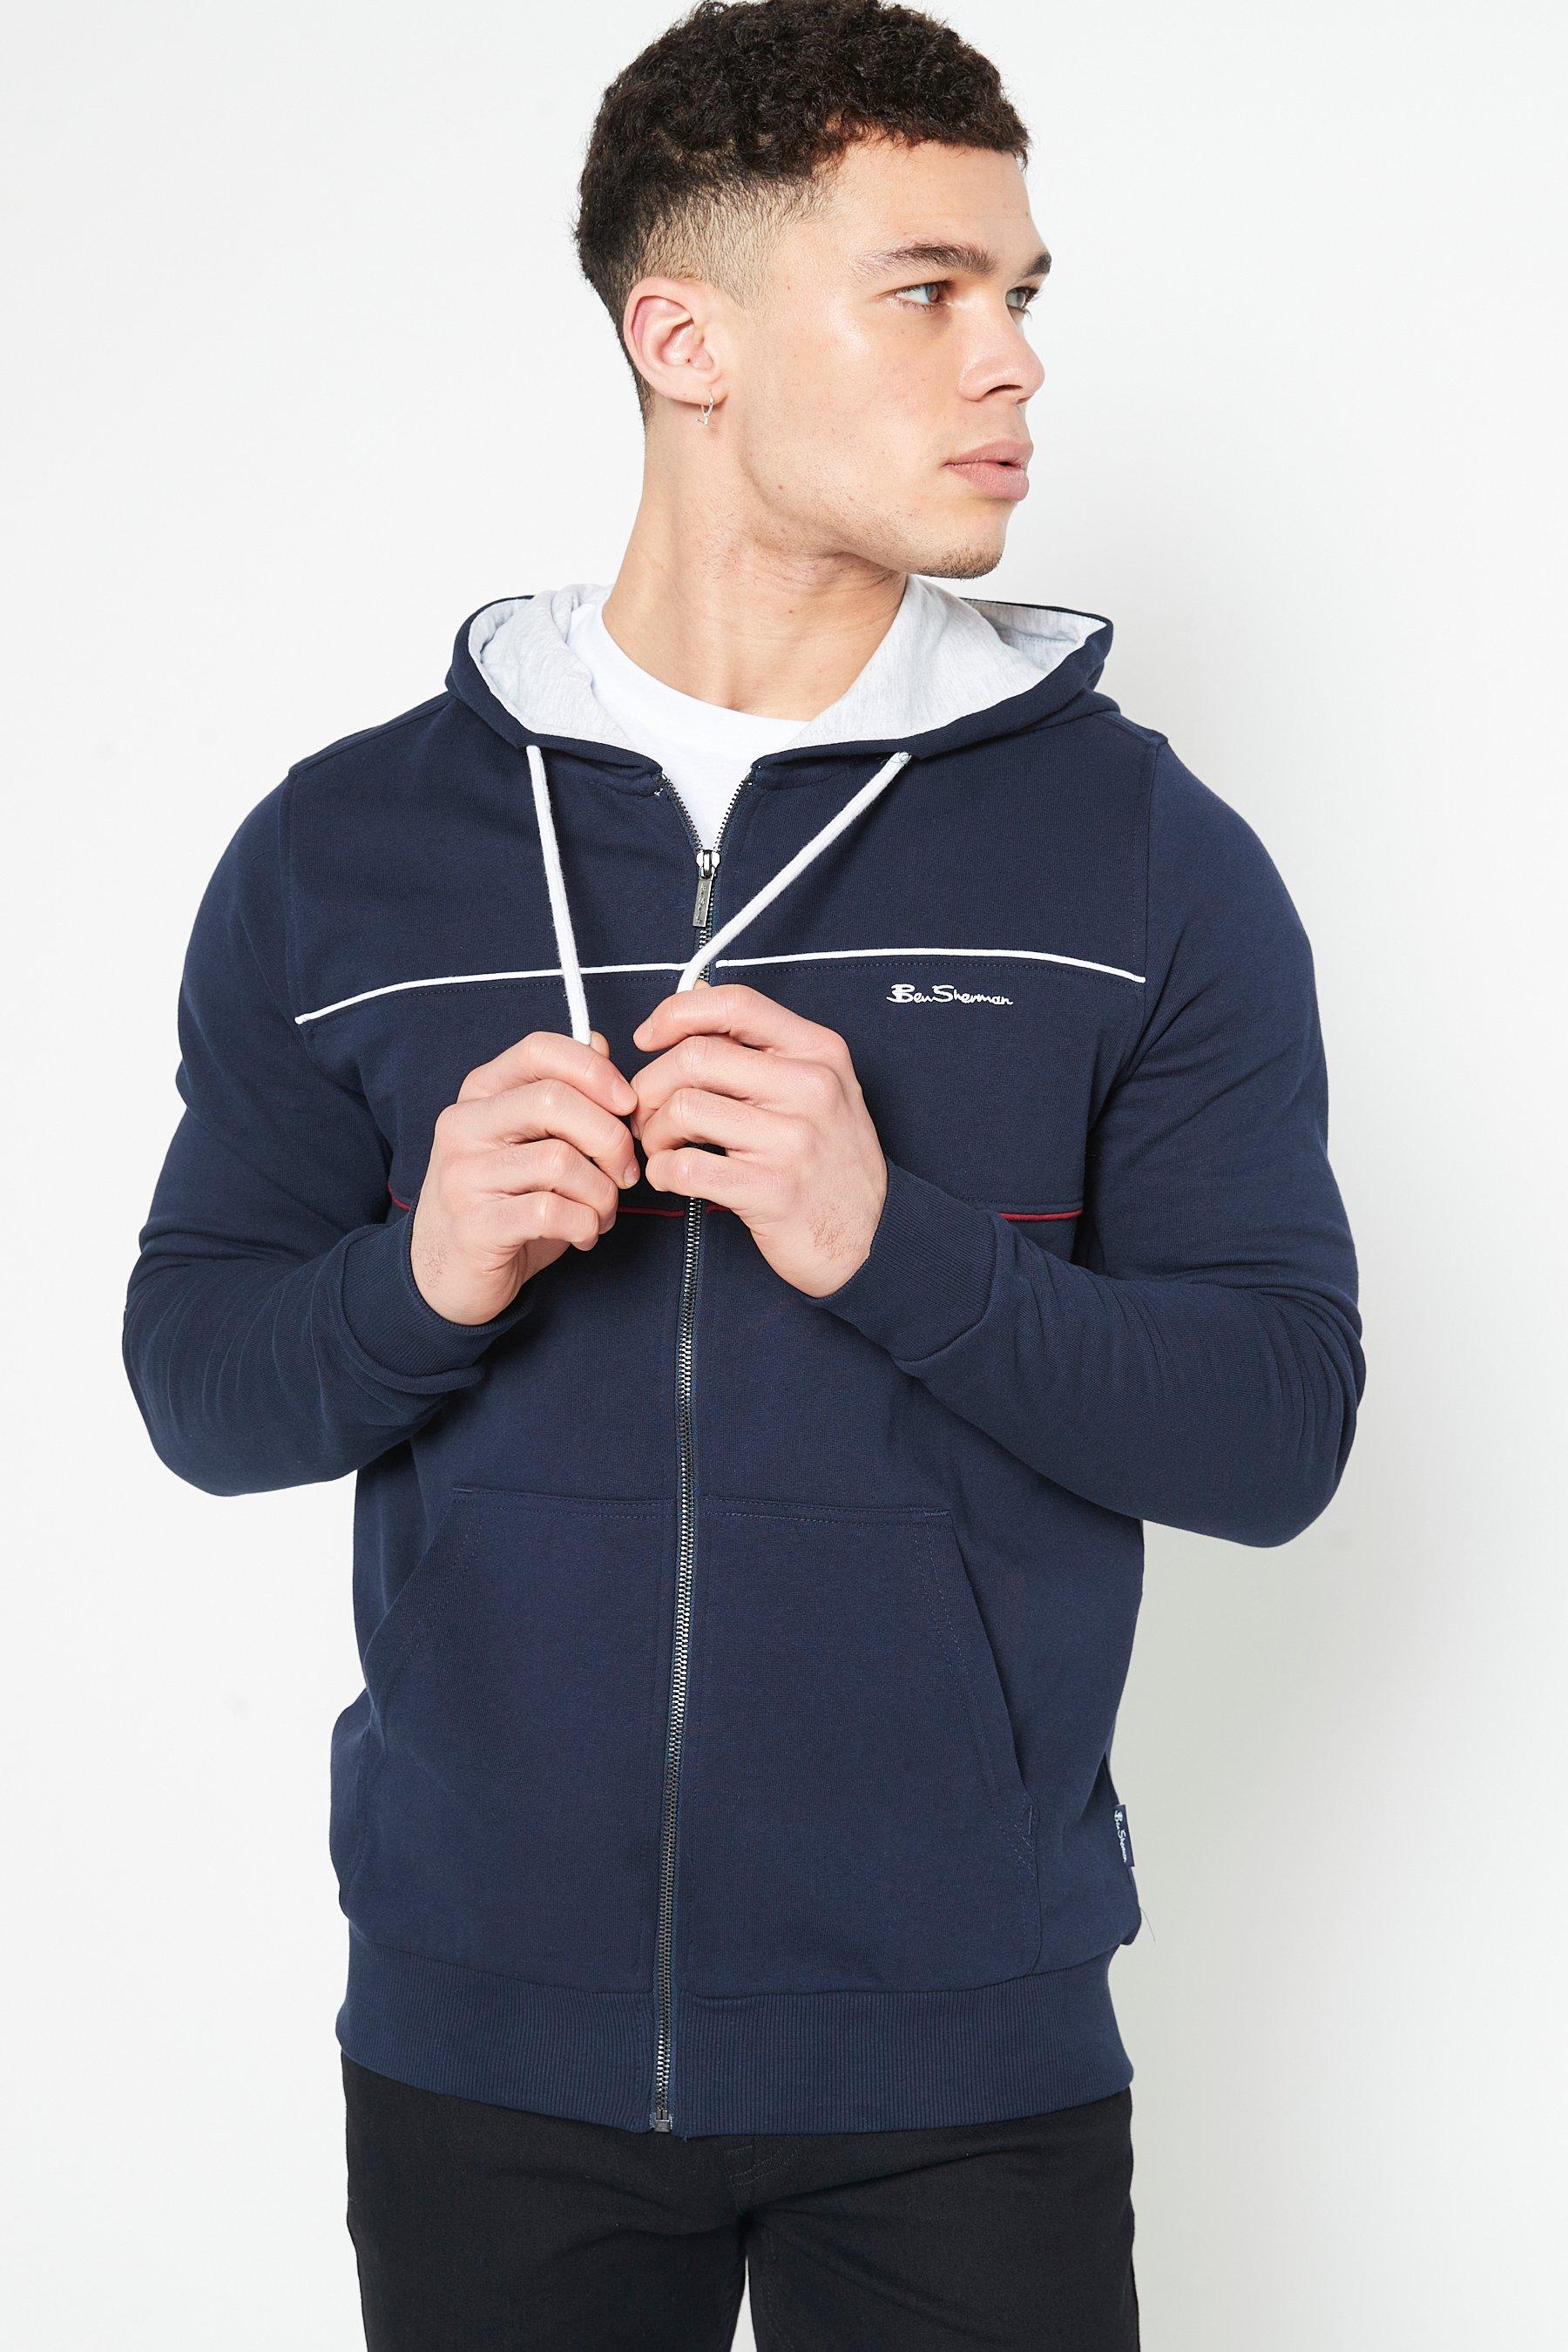 ben sherman stripe panel zip through hooded navy sweatshirt - mens - blue - size: small